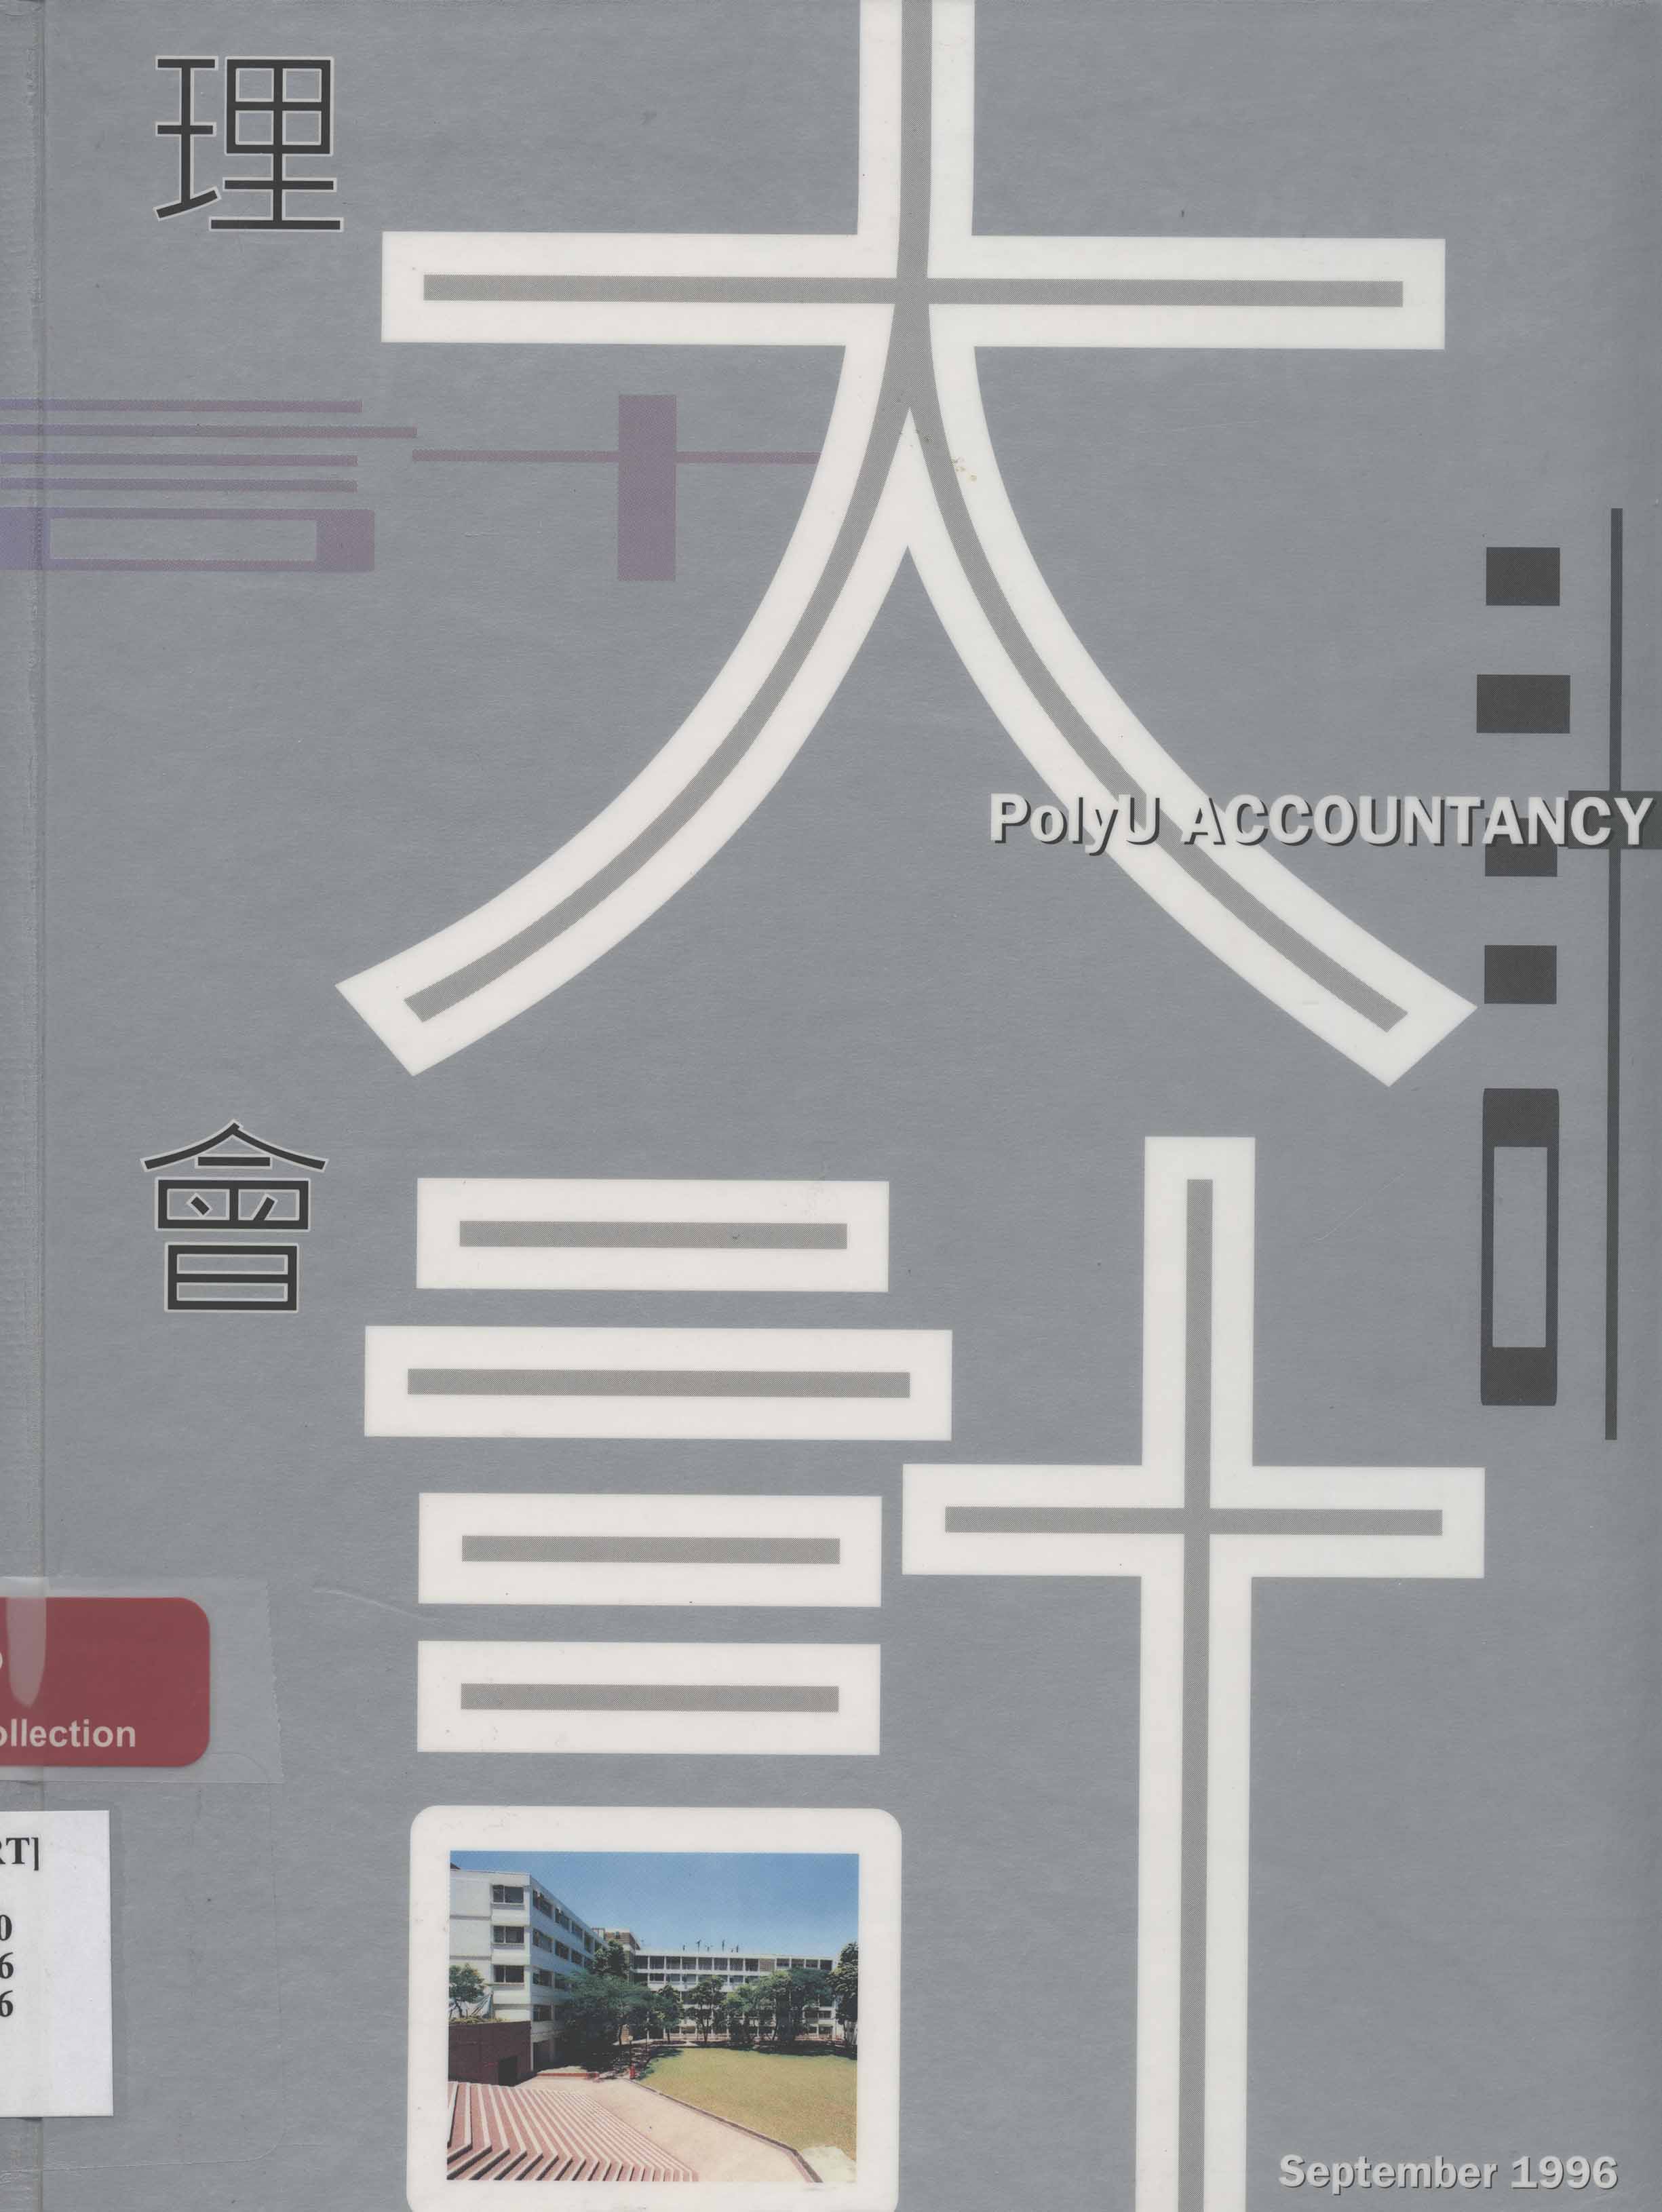 Hong Kong Polytechnic University. Department of Accountancy. Departmental update 1996